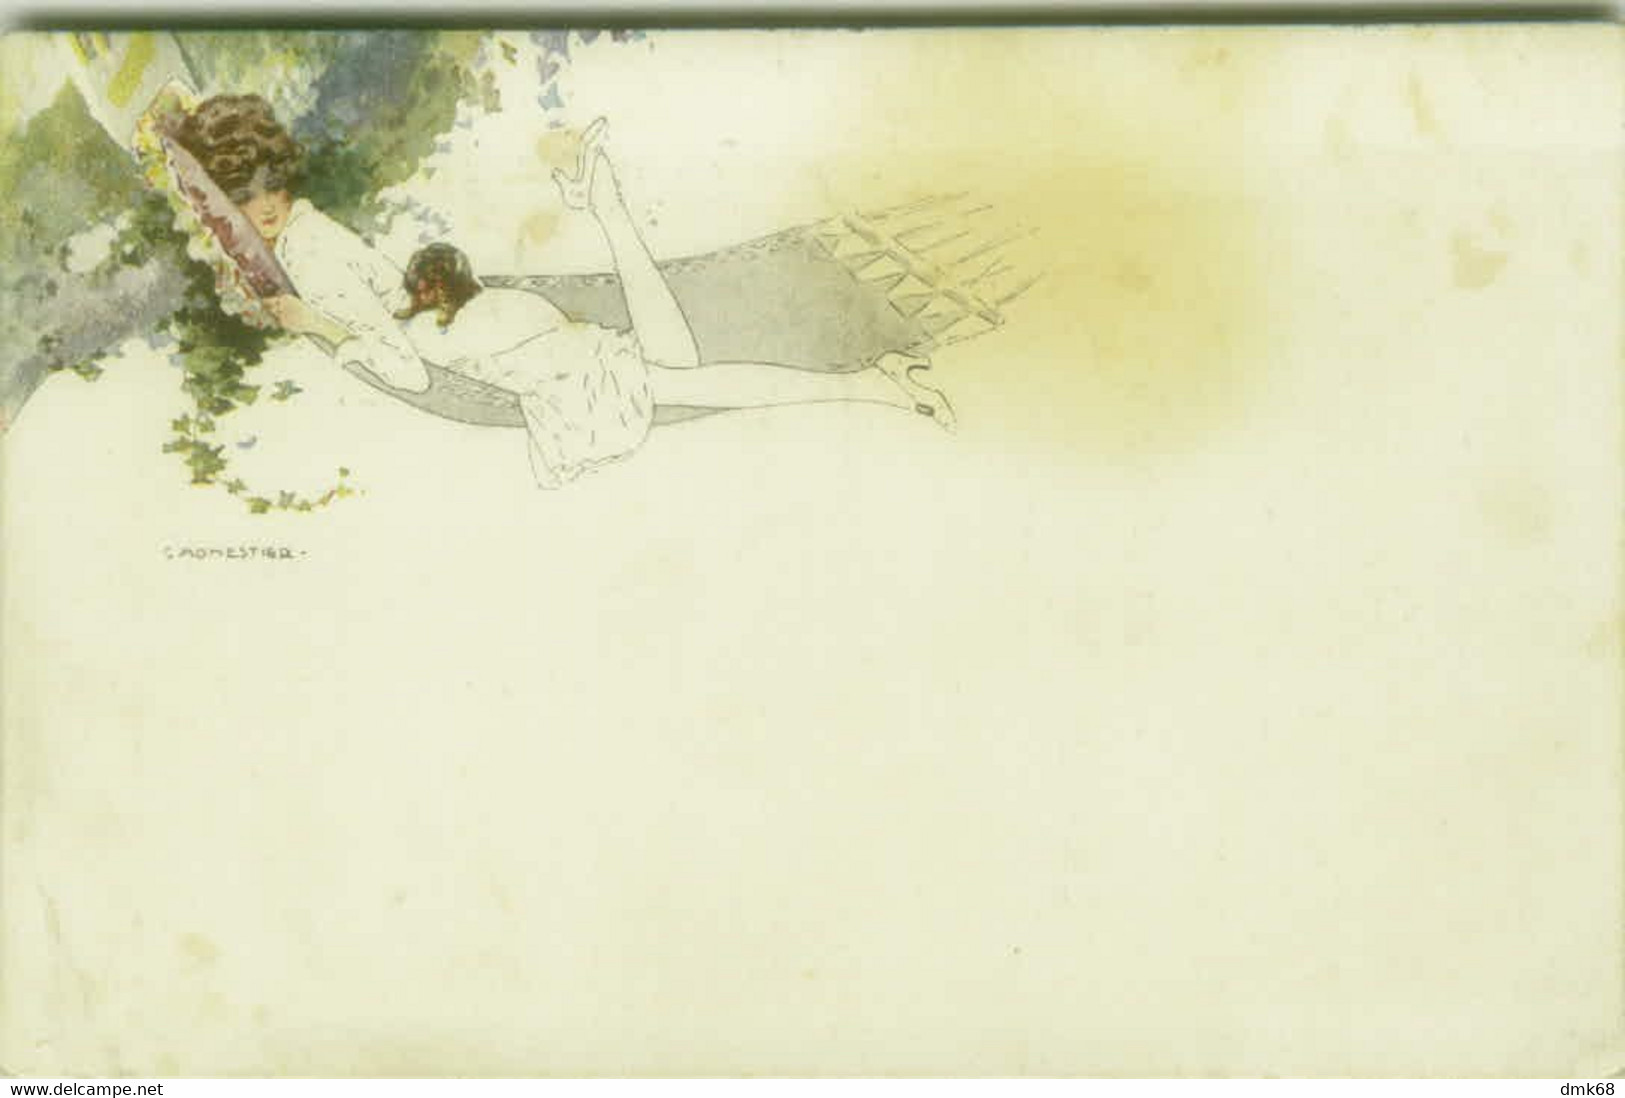 MONESTIER SIGNED 1920s POSTCARD - WOMAN WITH DOG ON AMACA - N.314  (BG1904) - Monestier, C.